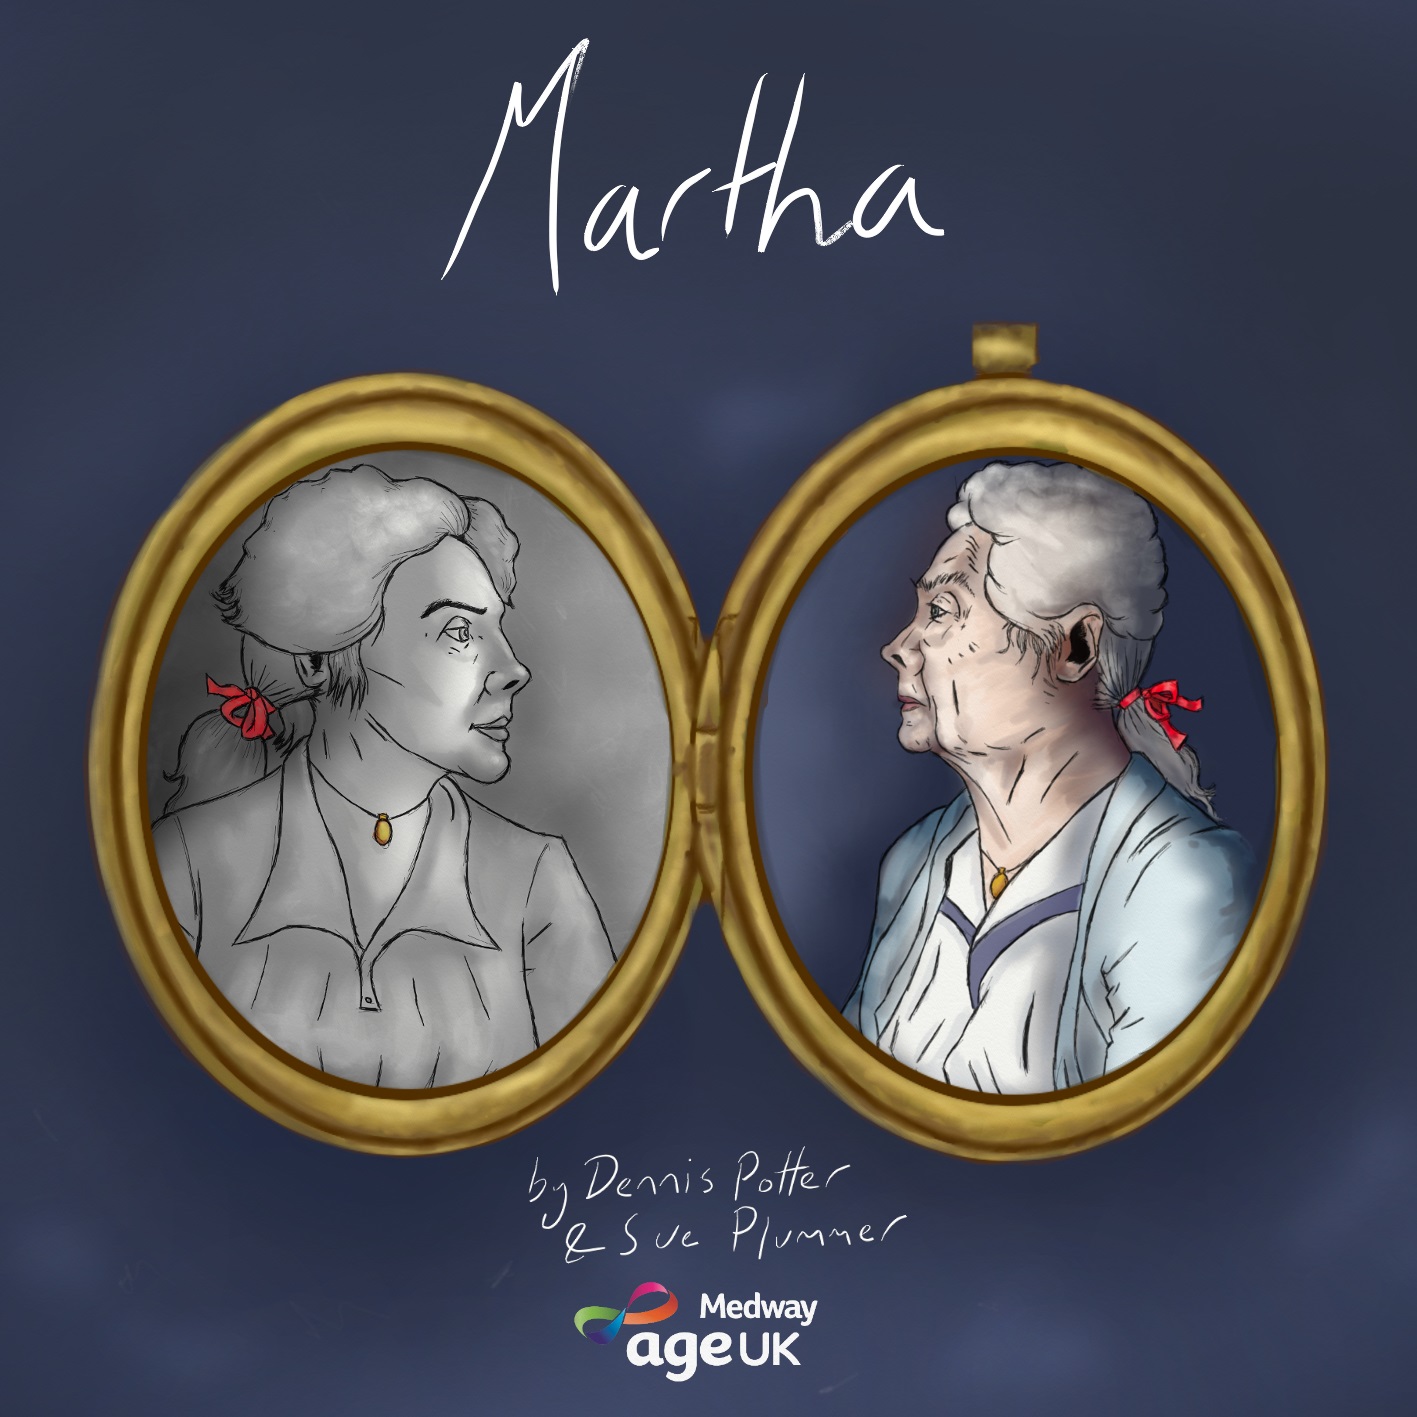 Martha CD cover